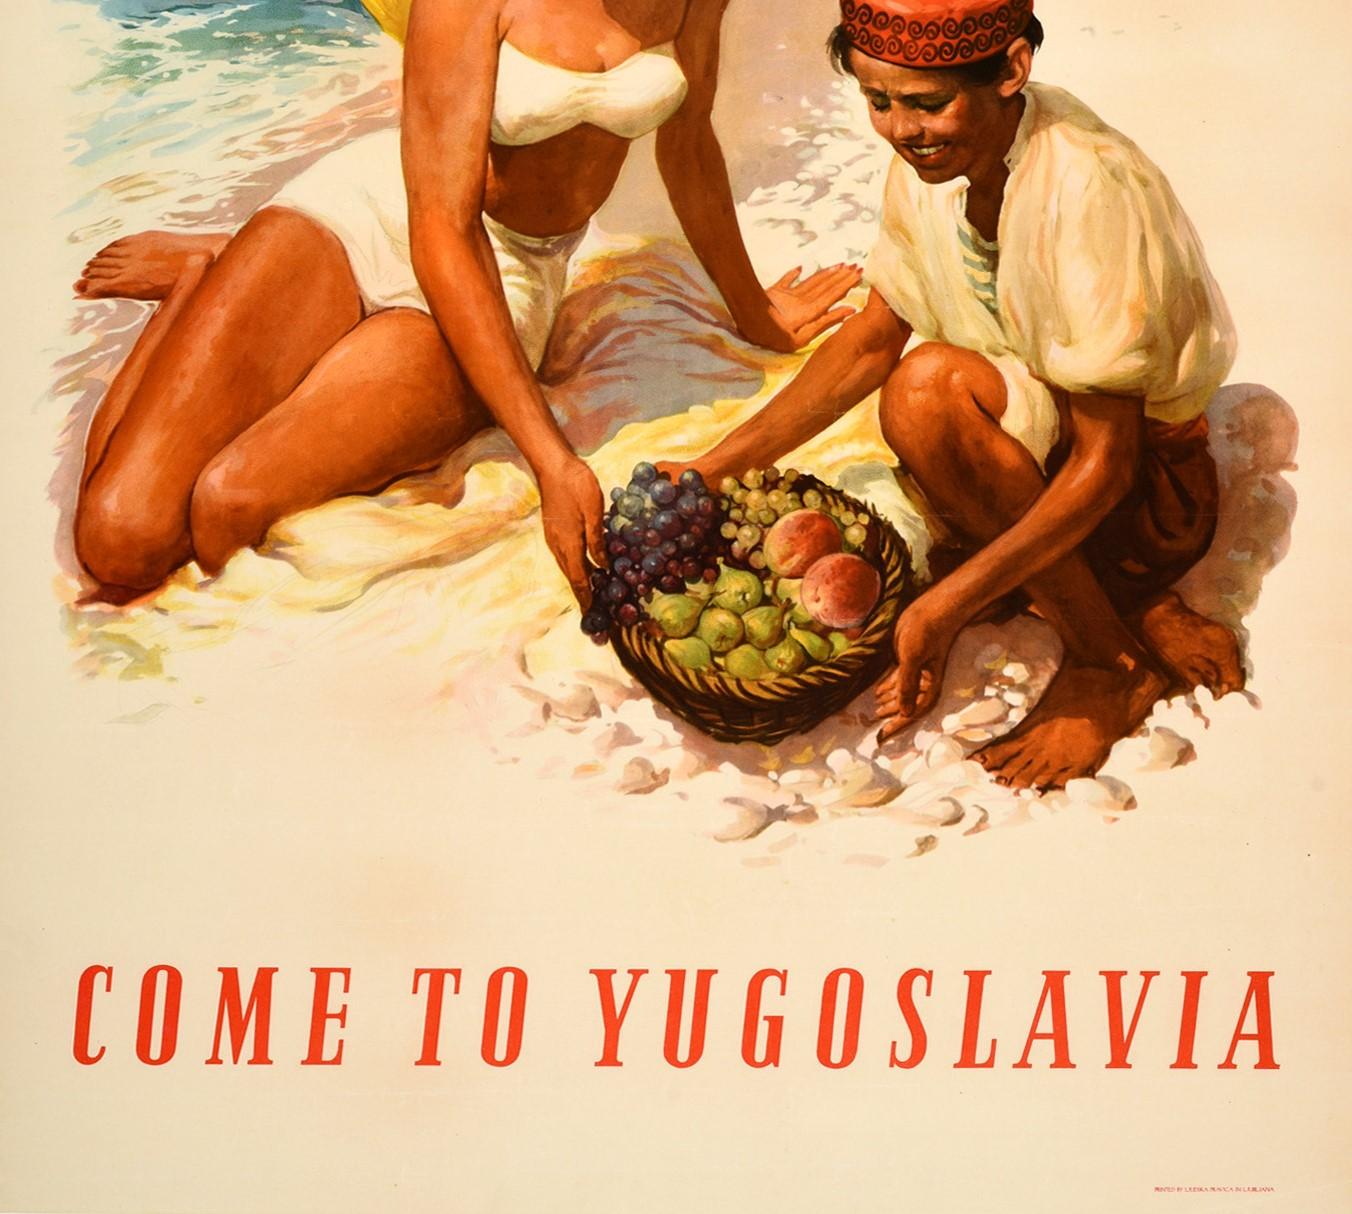 yugoslavia vintage poster